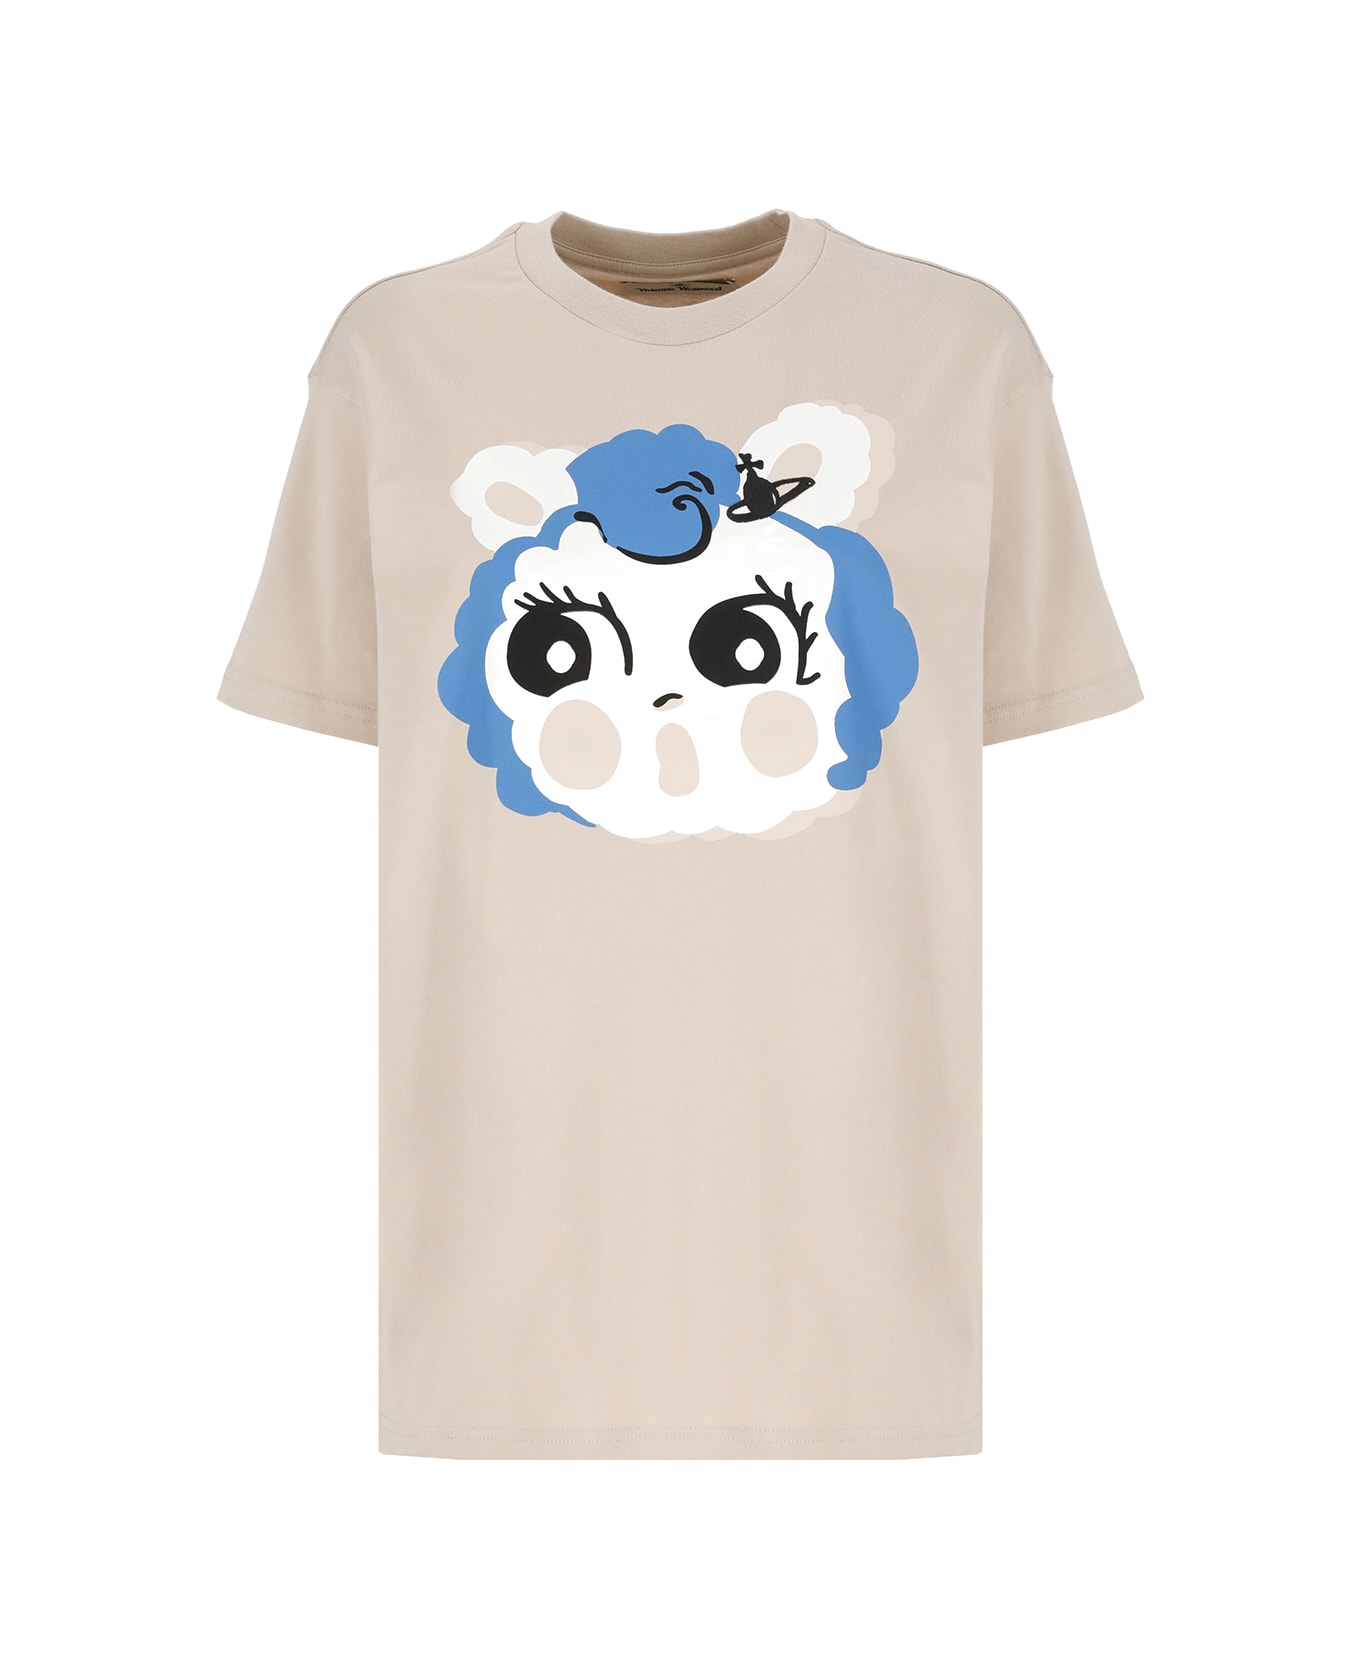 Vivienne Westwood Molly Classic T-shirt - Beige Tシャツ